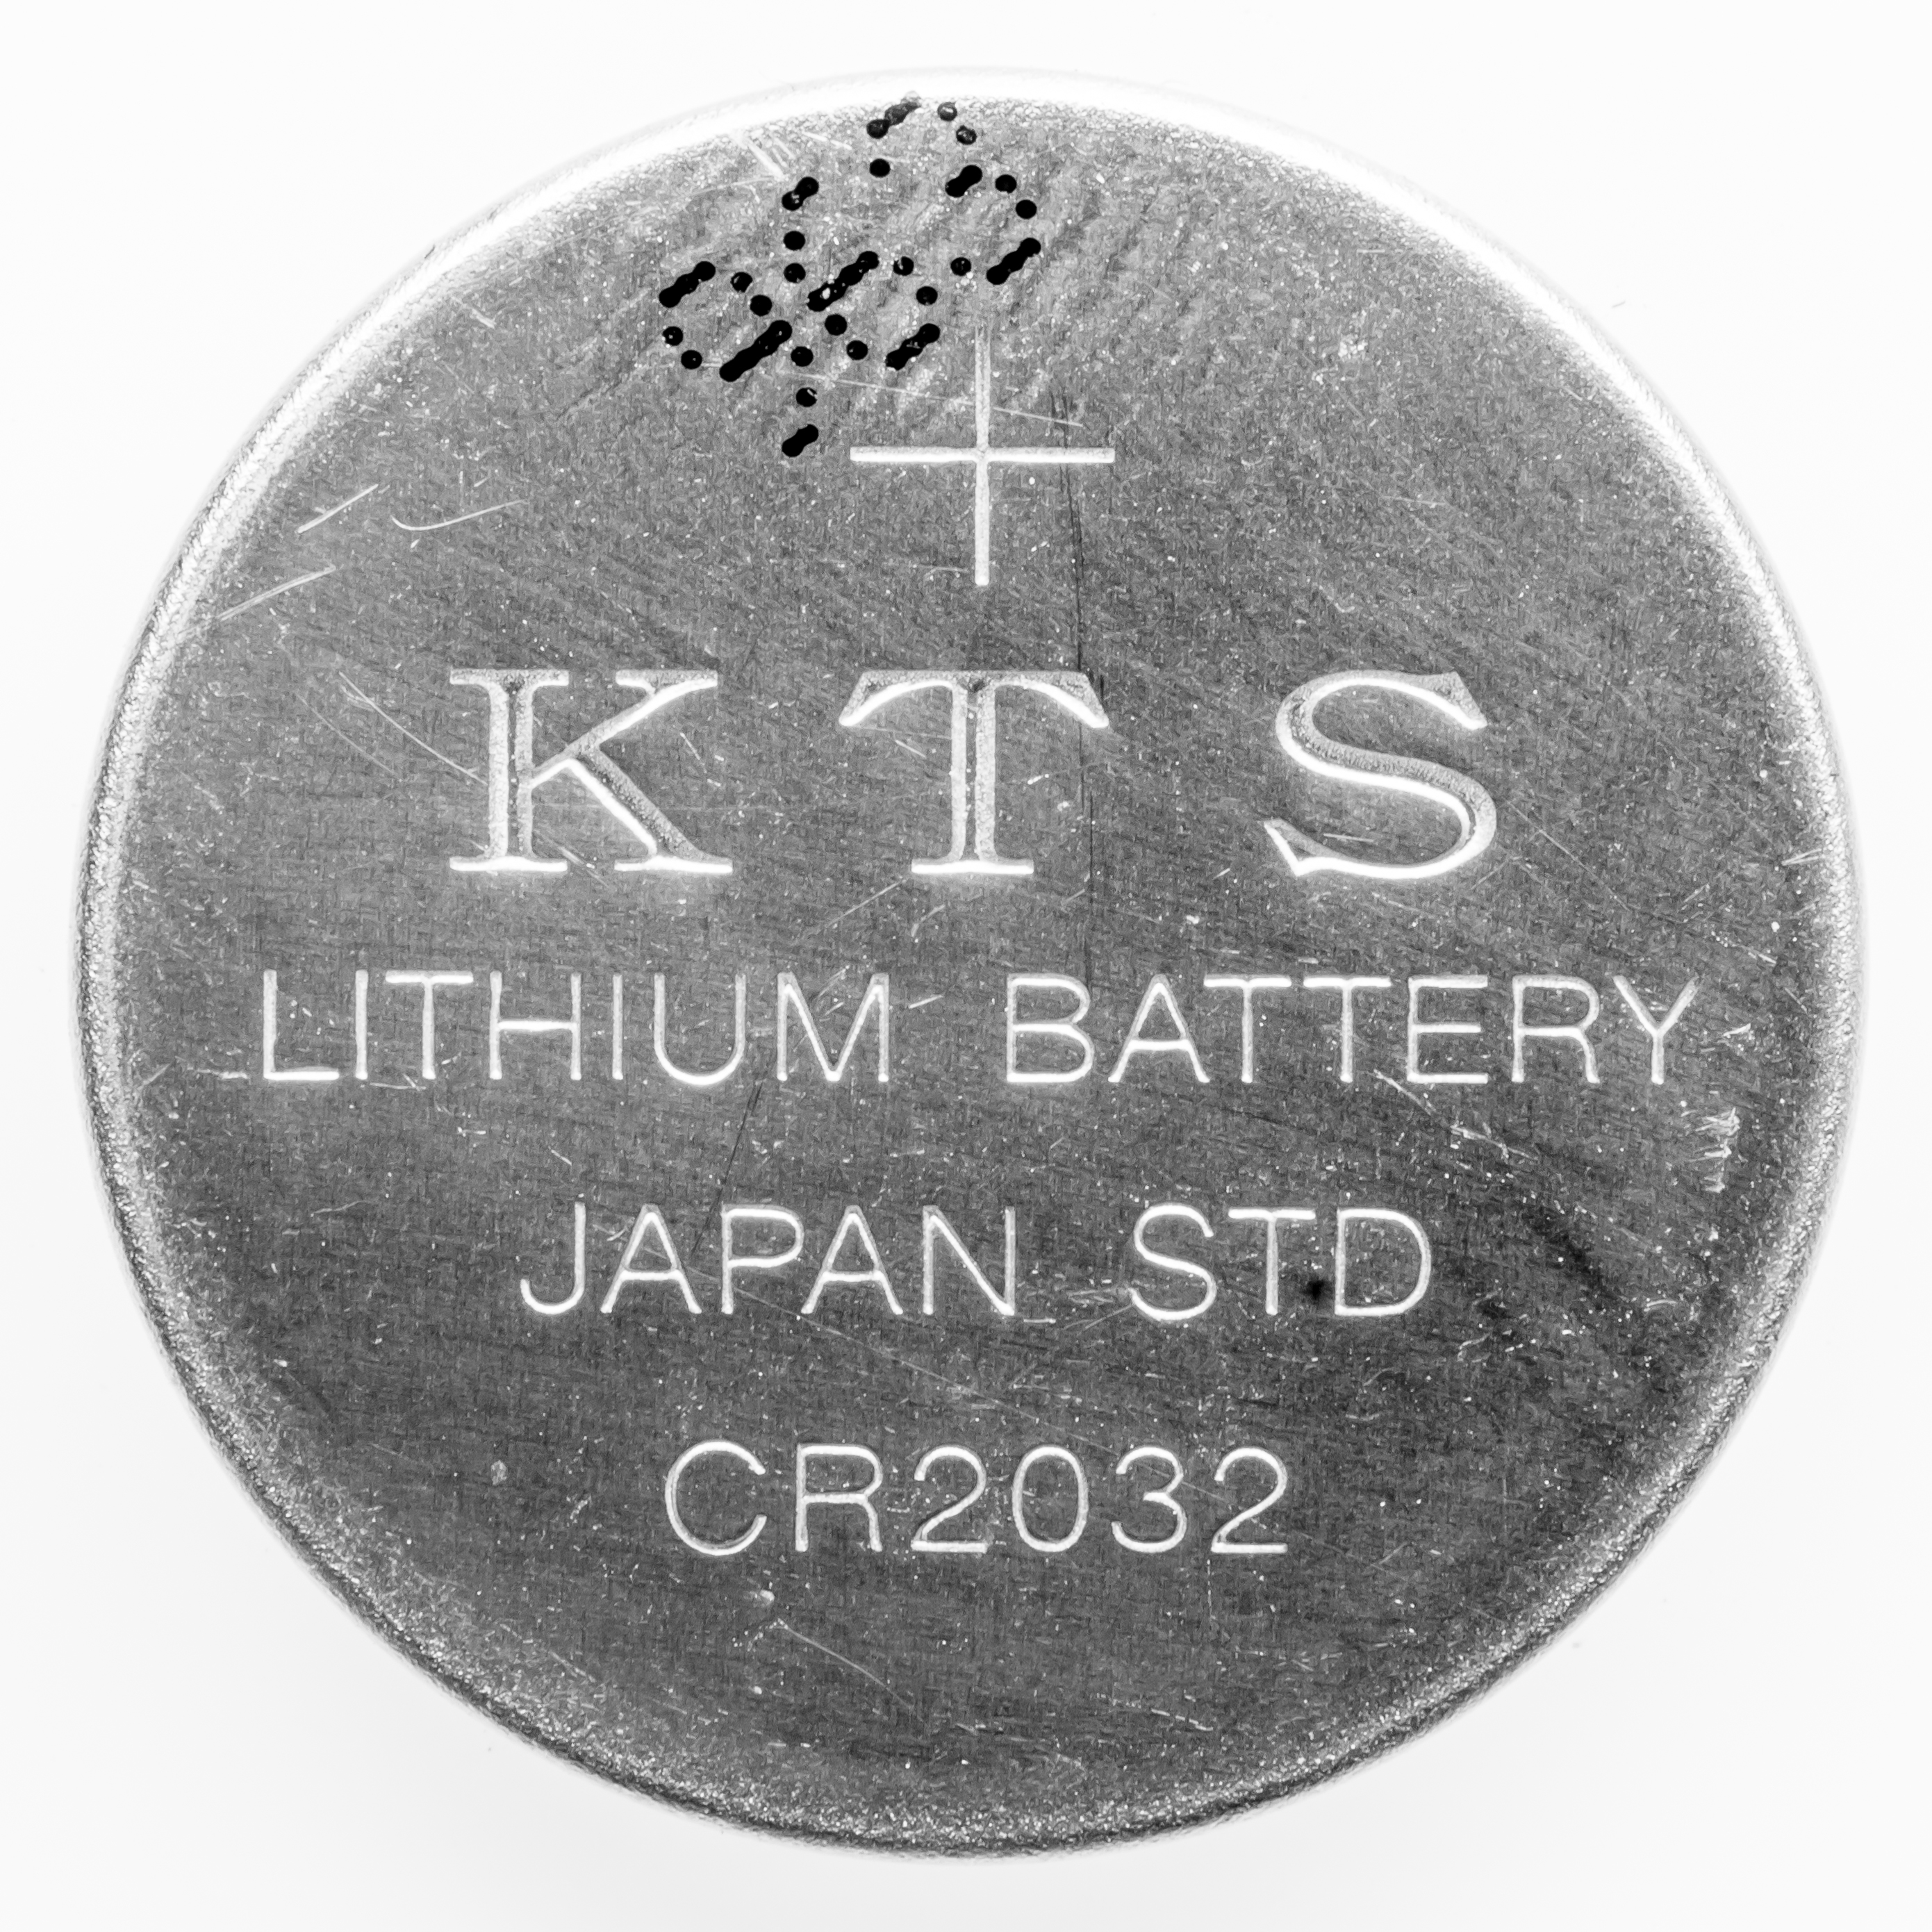 kts lithium battery cr2032